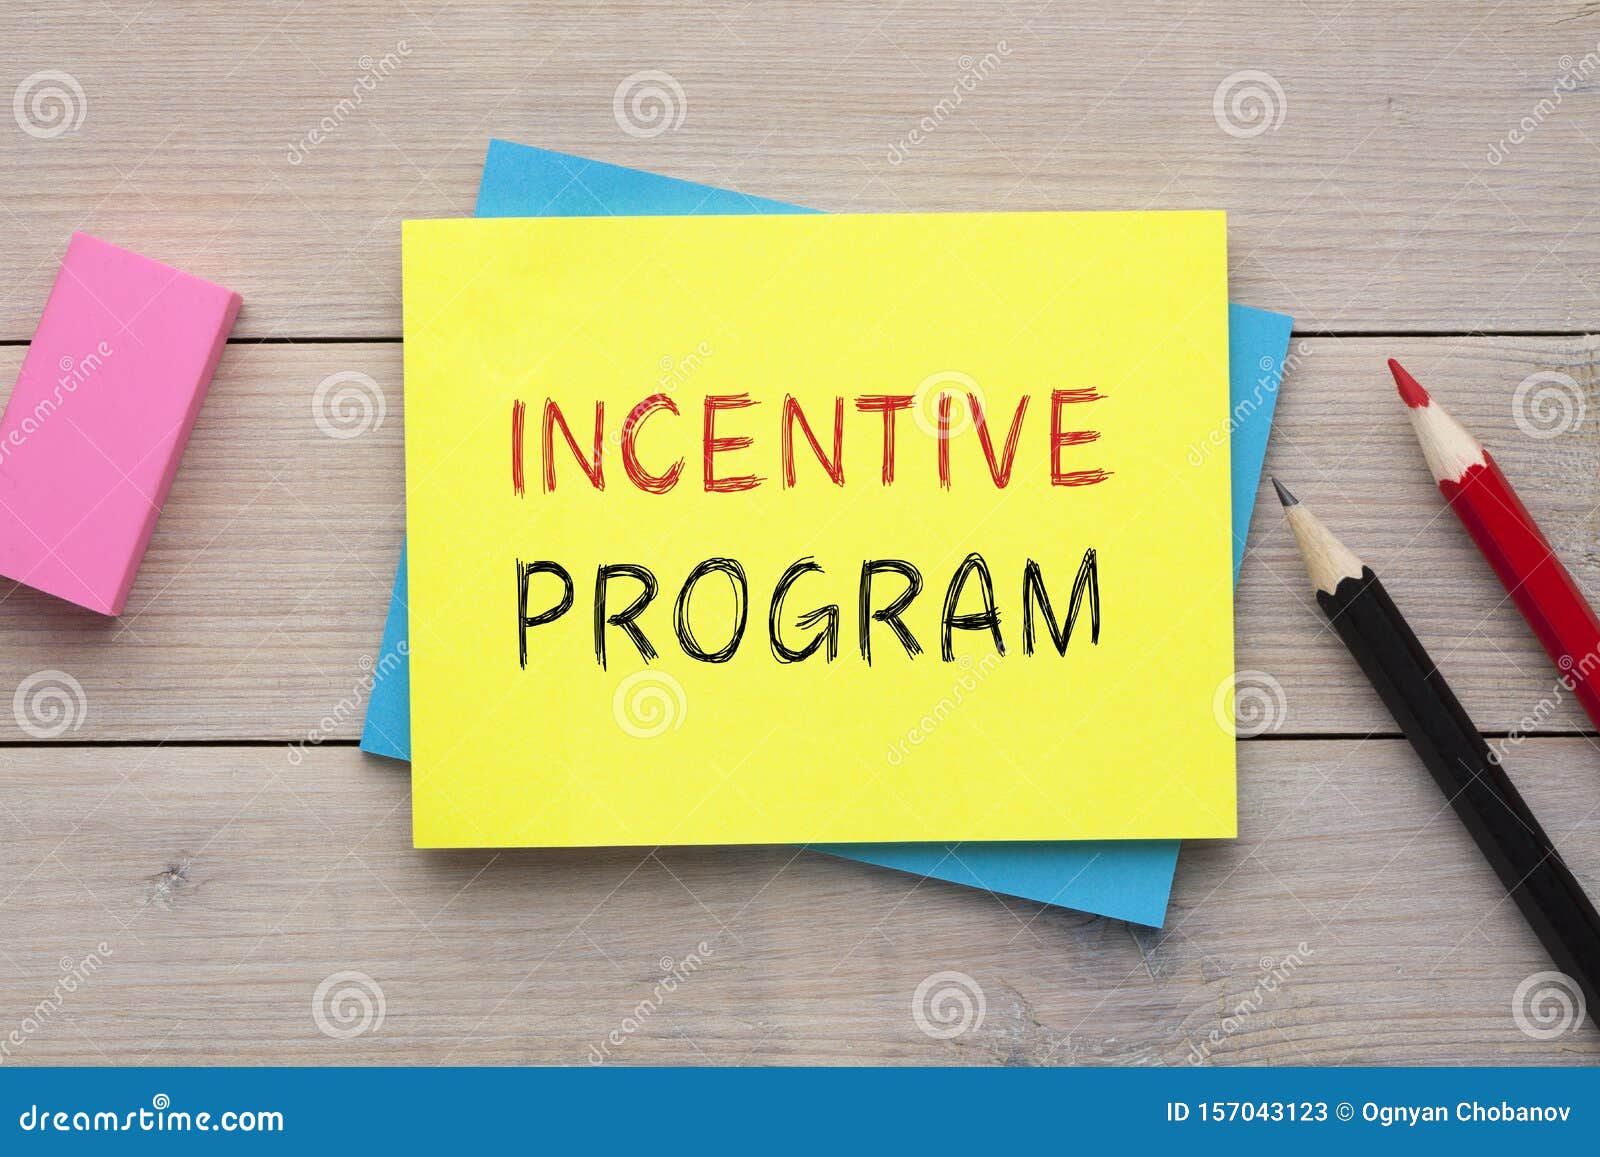 incentive program concept